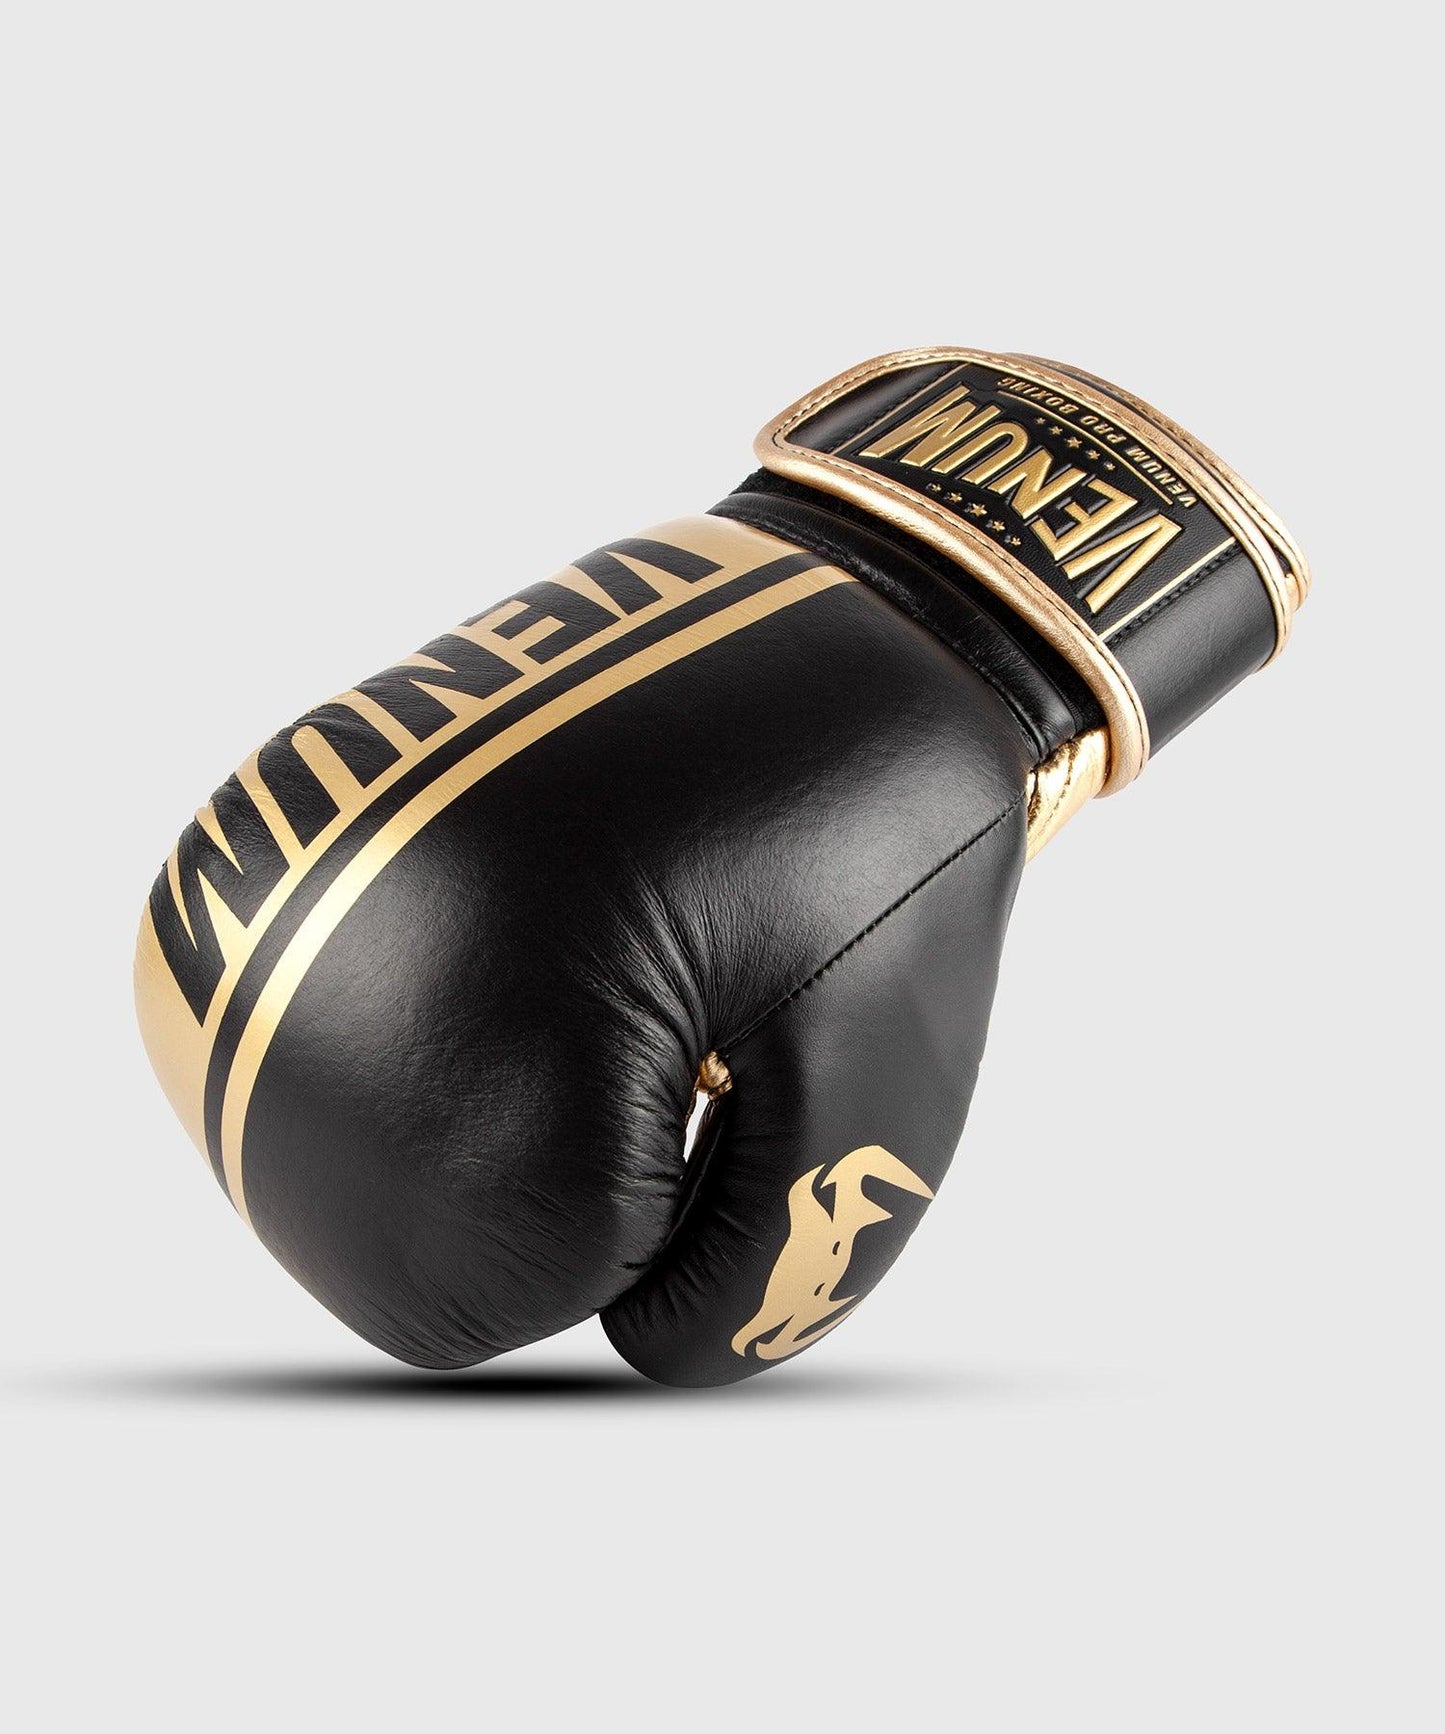 Venum Shield Pro Boxing Gloves Velcro - Black/Gold Picture 1